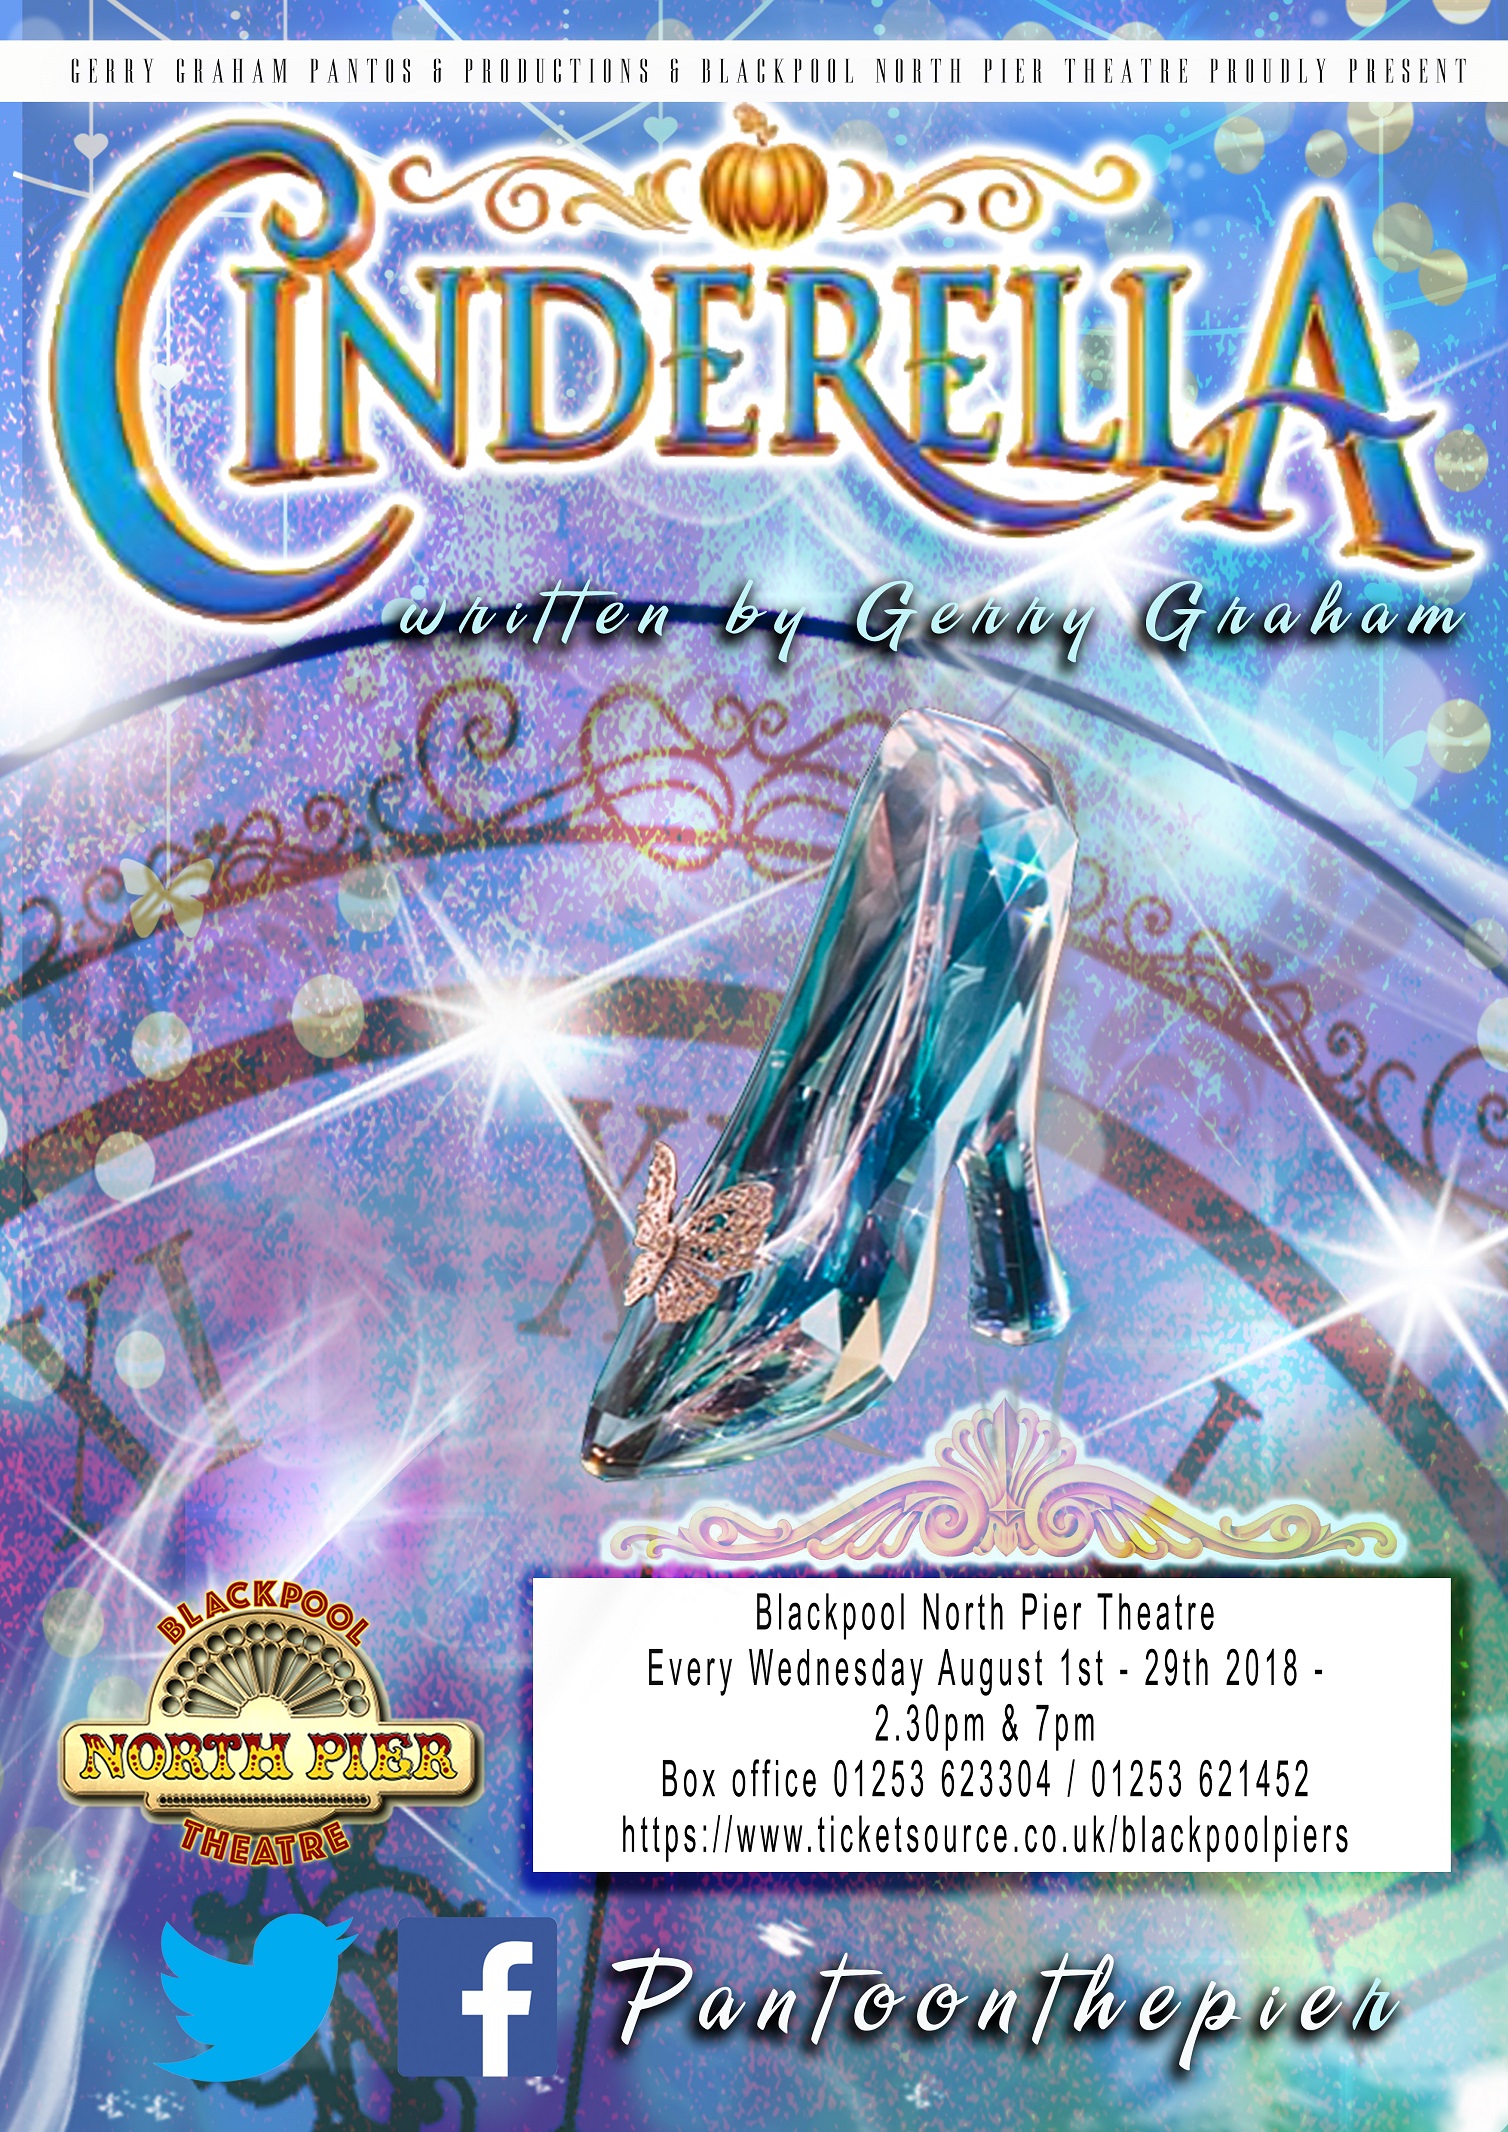 Cinderella Summer pantomime at blackpool north pier